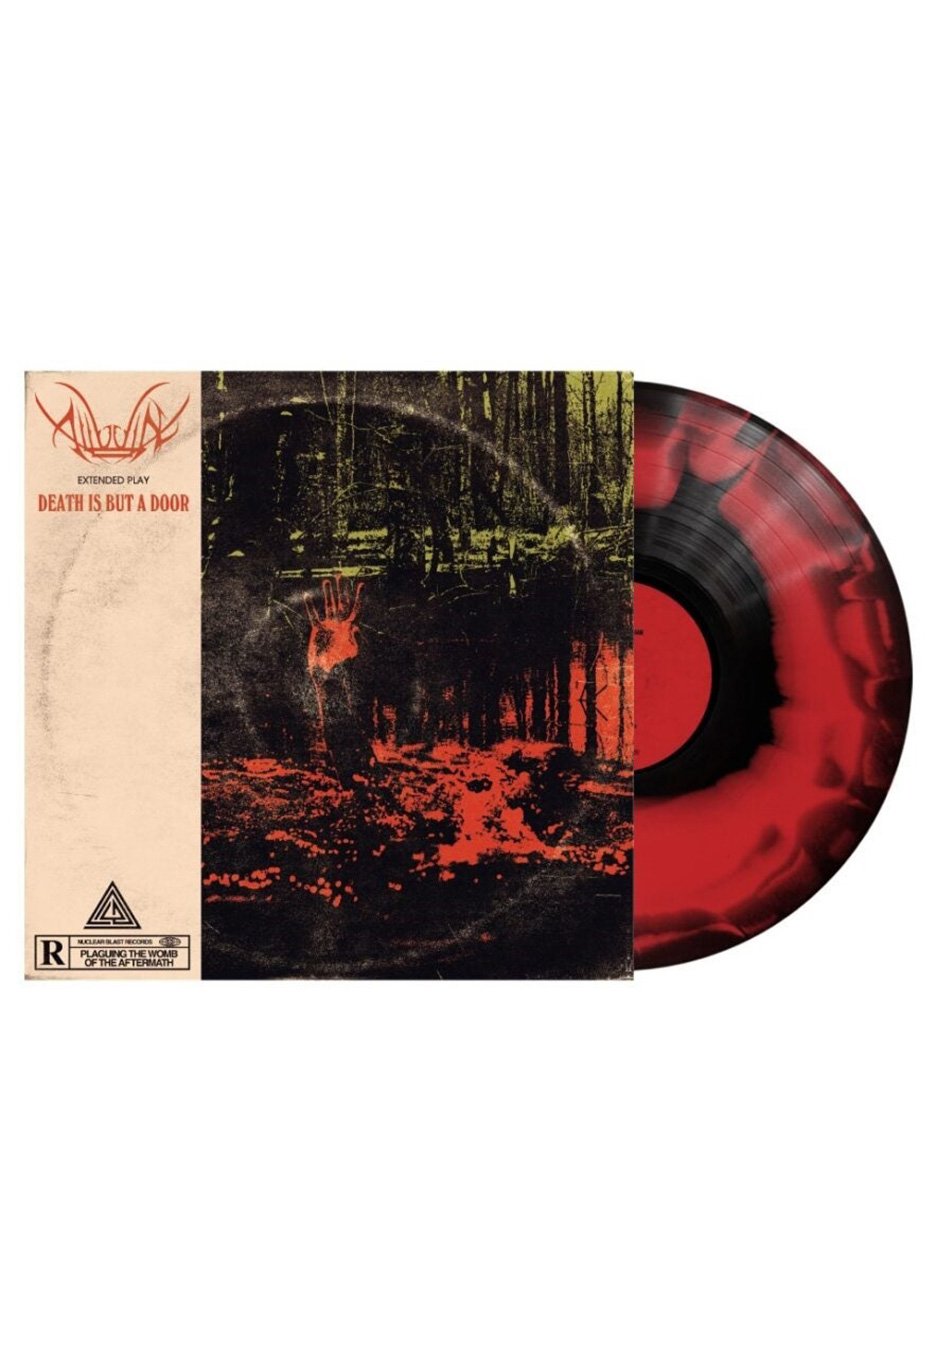 Alluvial - Death Is But A Door Ltd. Black/Red Swirl - Colored Vinyl